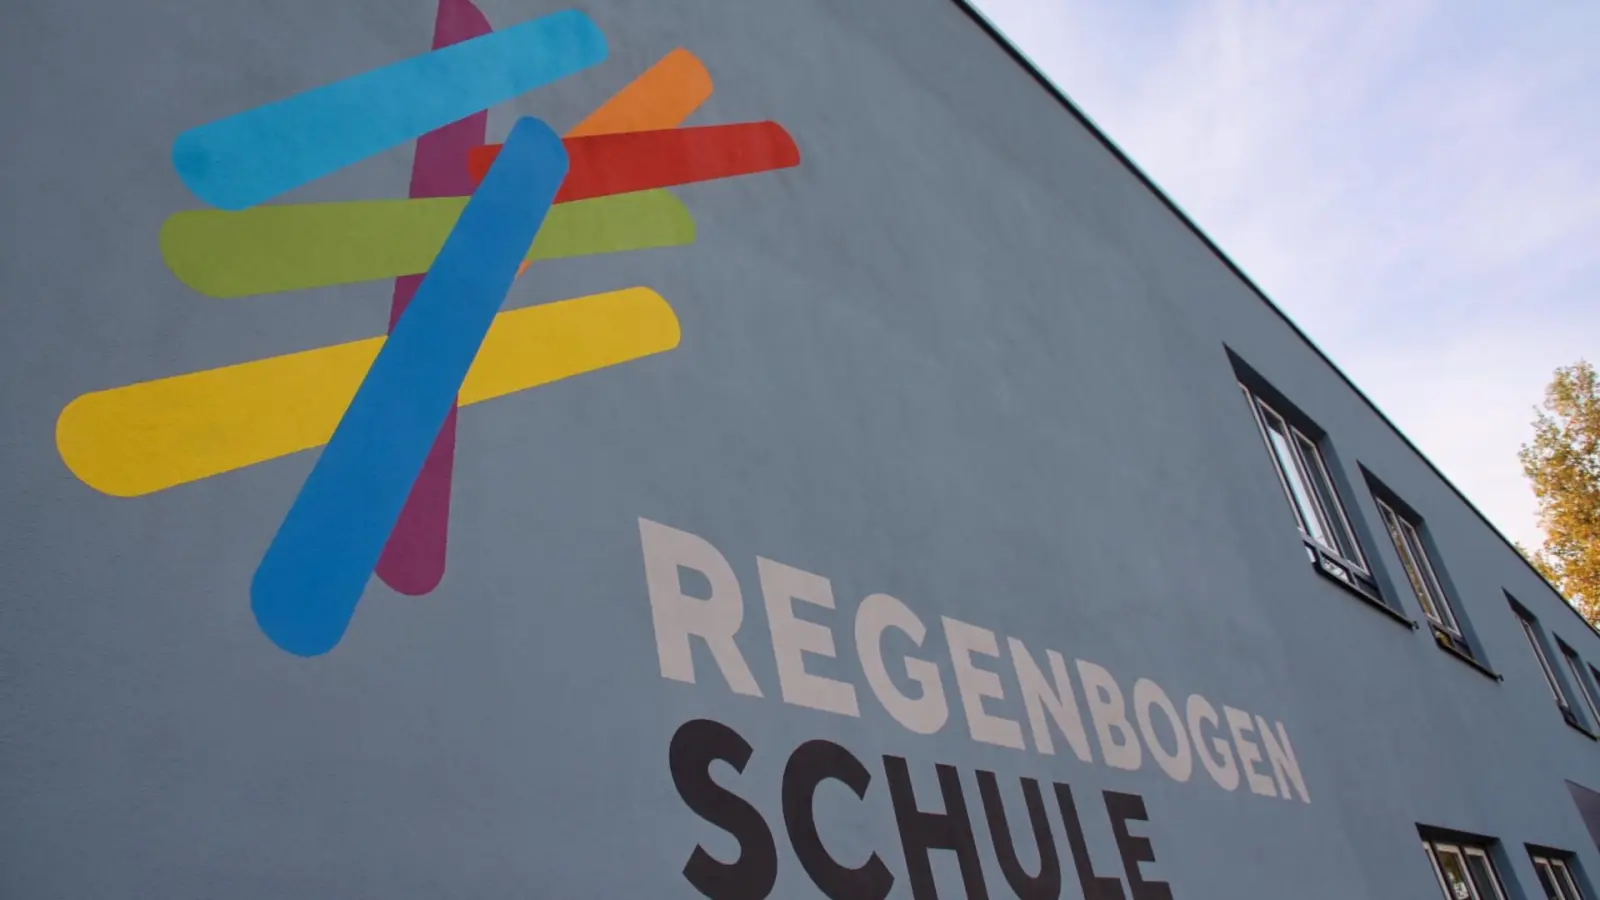 Regenbogenschule: Schülerin positiv auf COVID-19 getestet (Foto: taucha-kompakt.de)